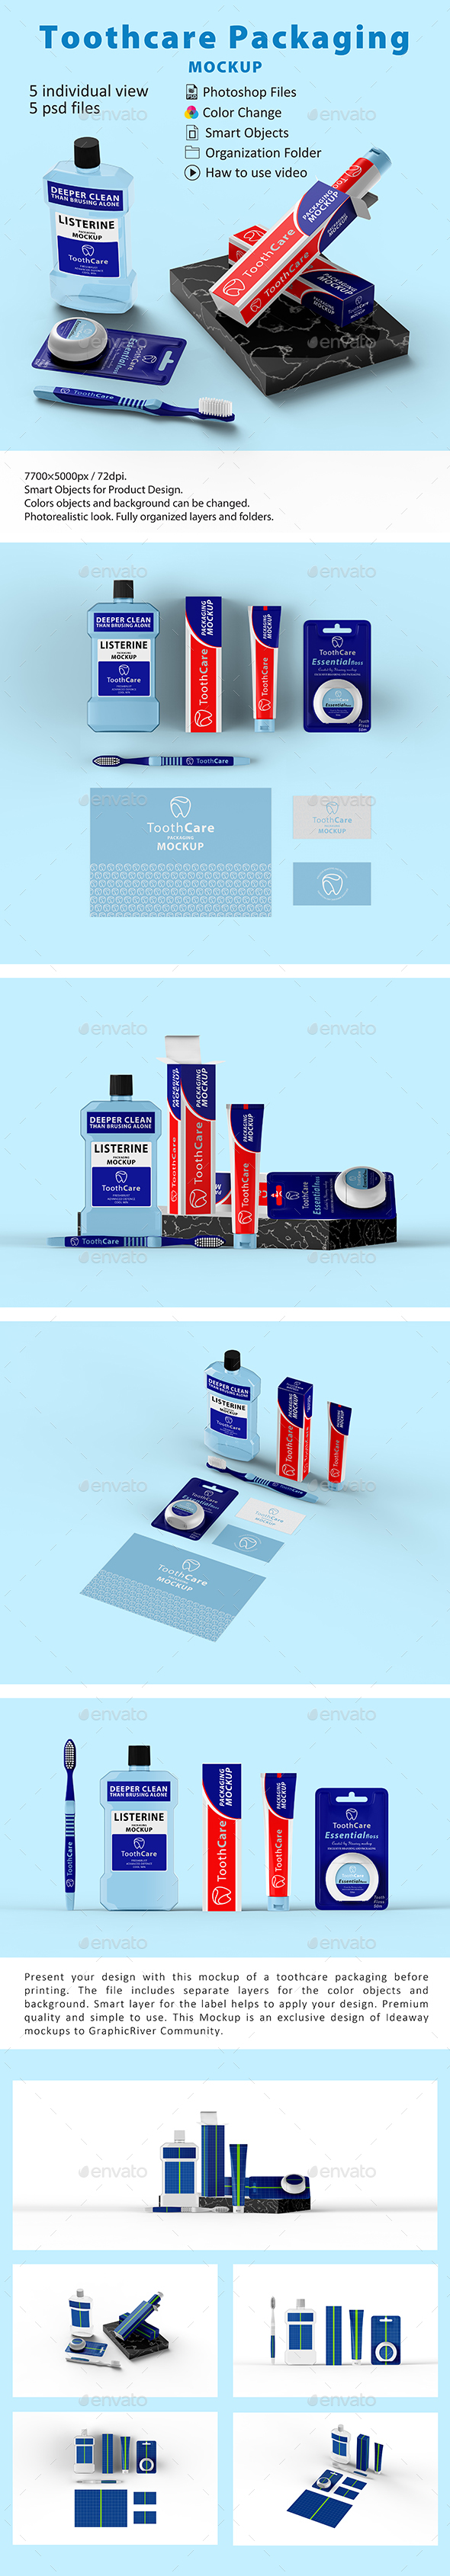 酒店旅行洗漱套装包装样机 Toothcare Packaging Mockup插图